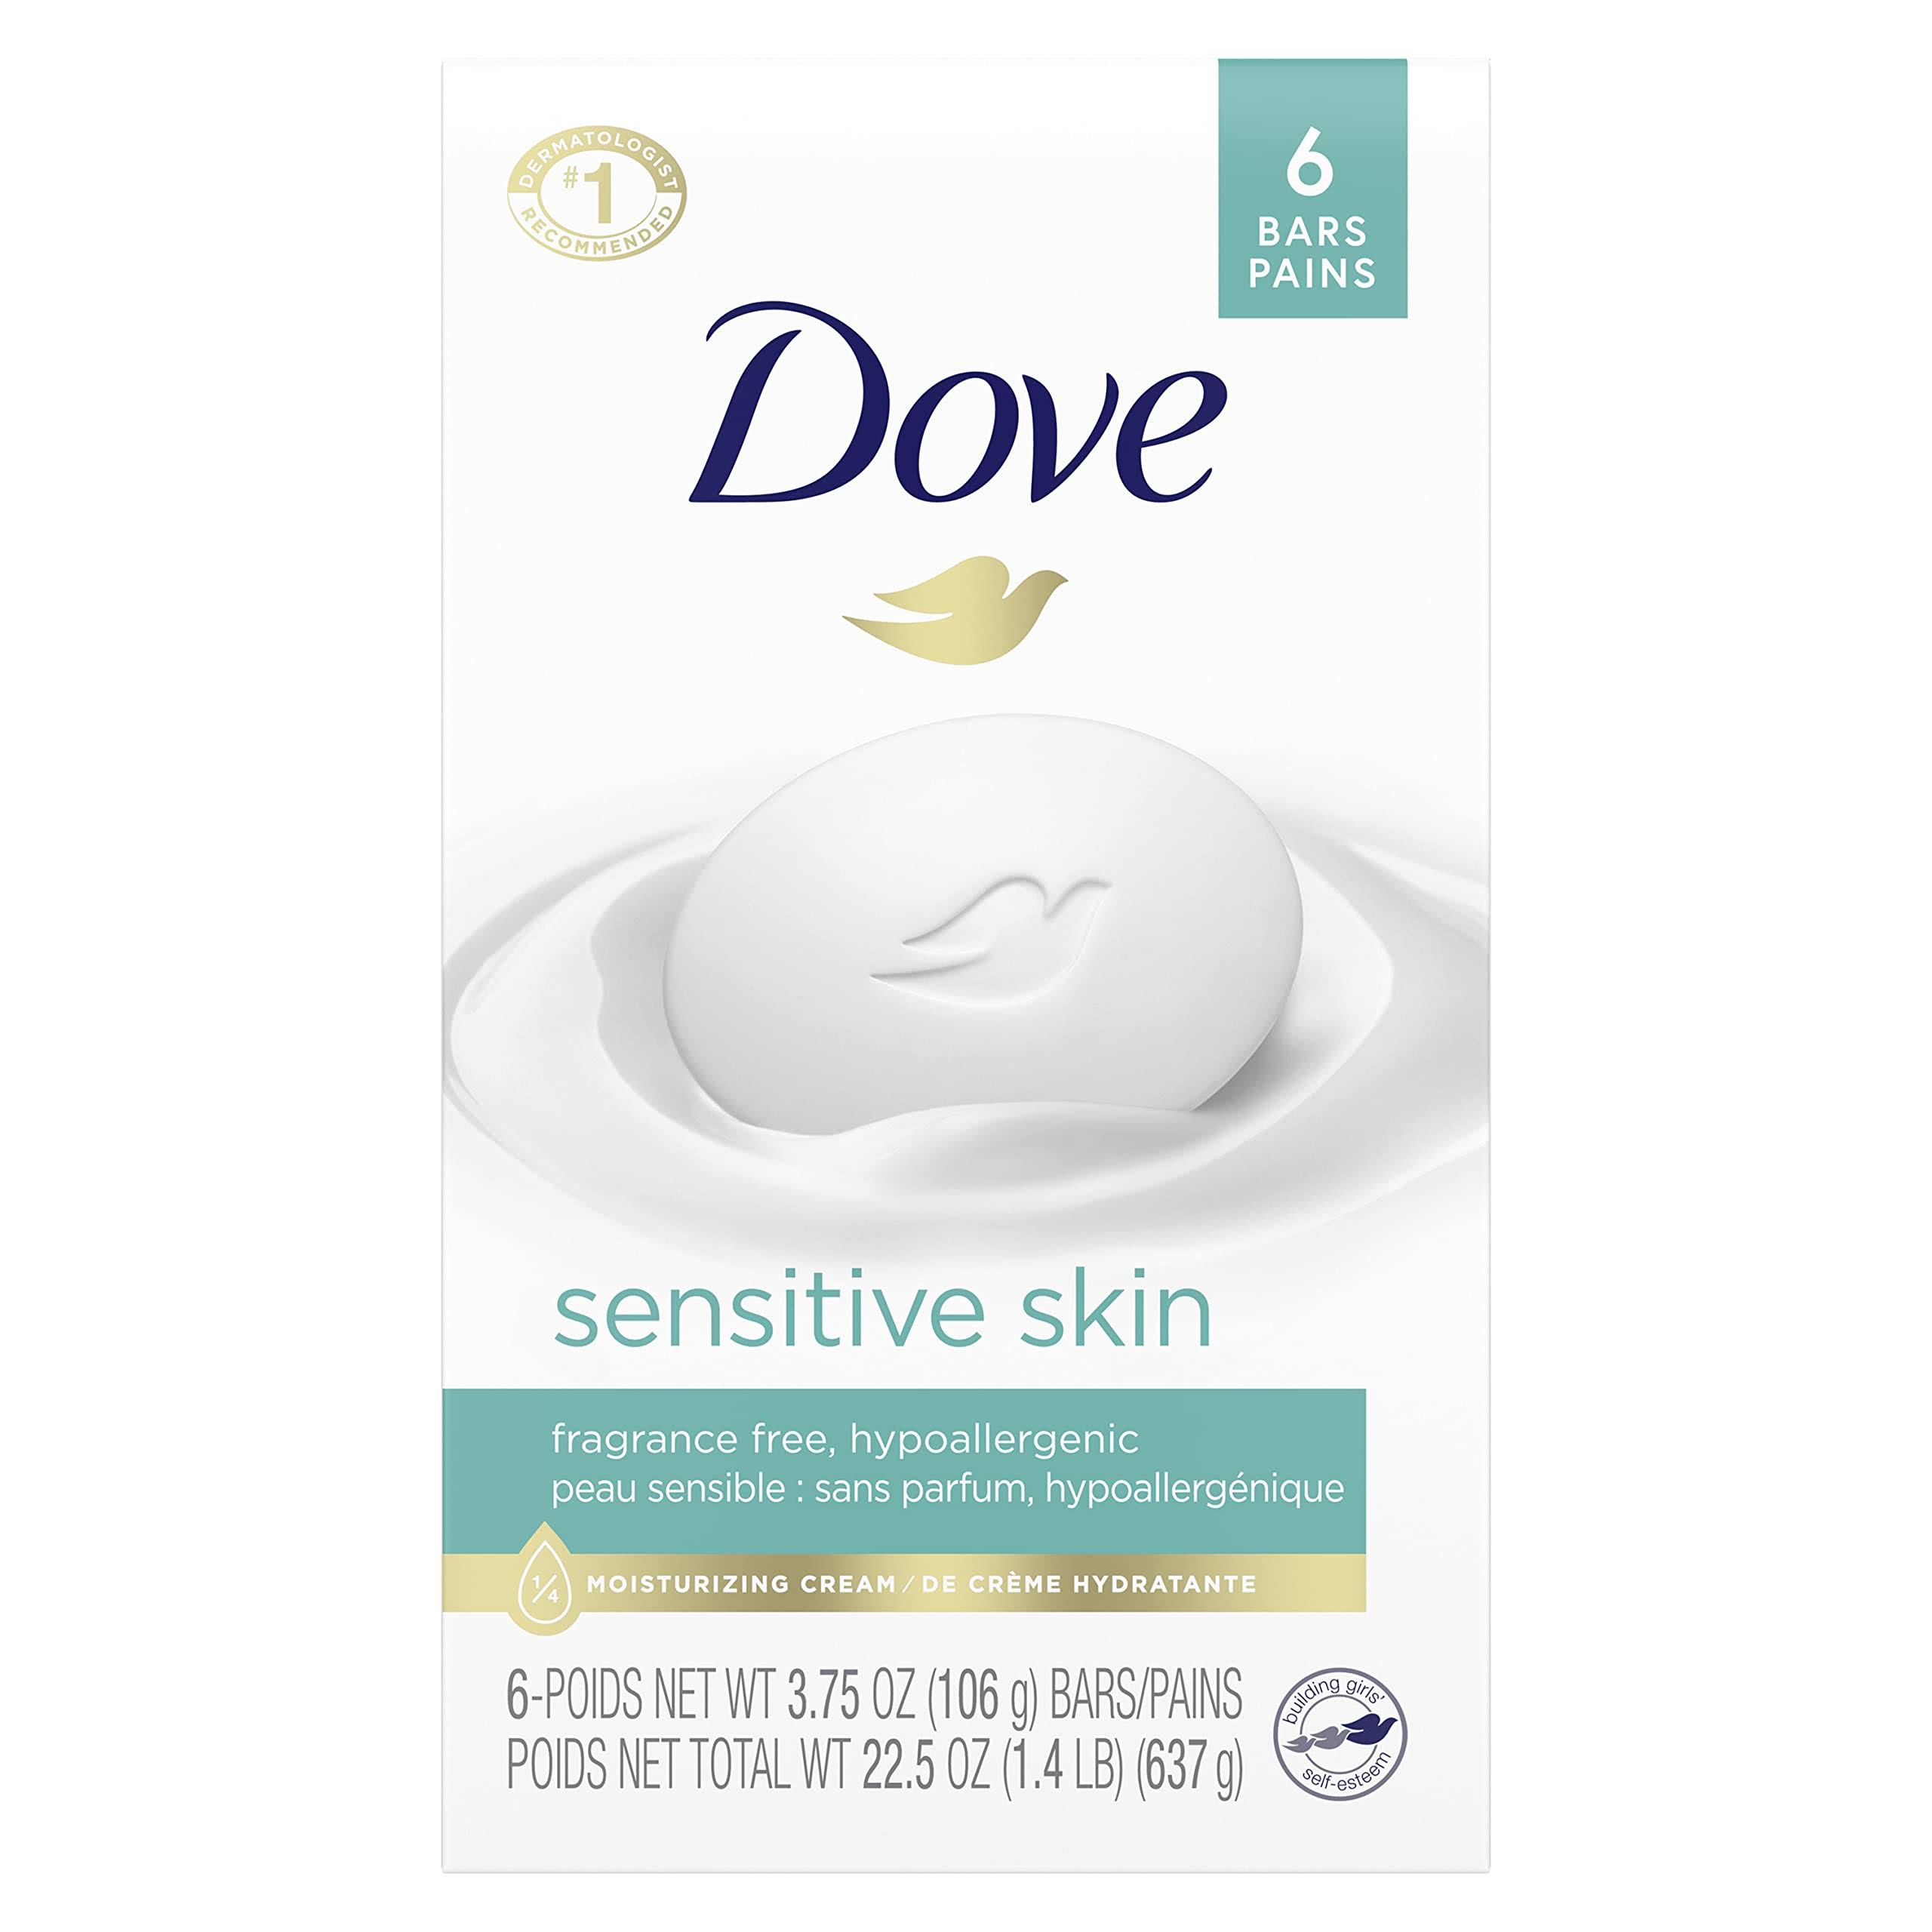 Dove Moisturizing Cream Beauty Bar - 6ct, Sensitive Skin, Unscented